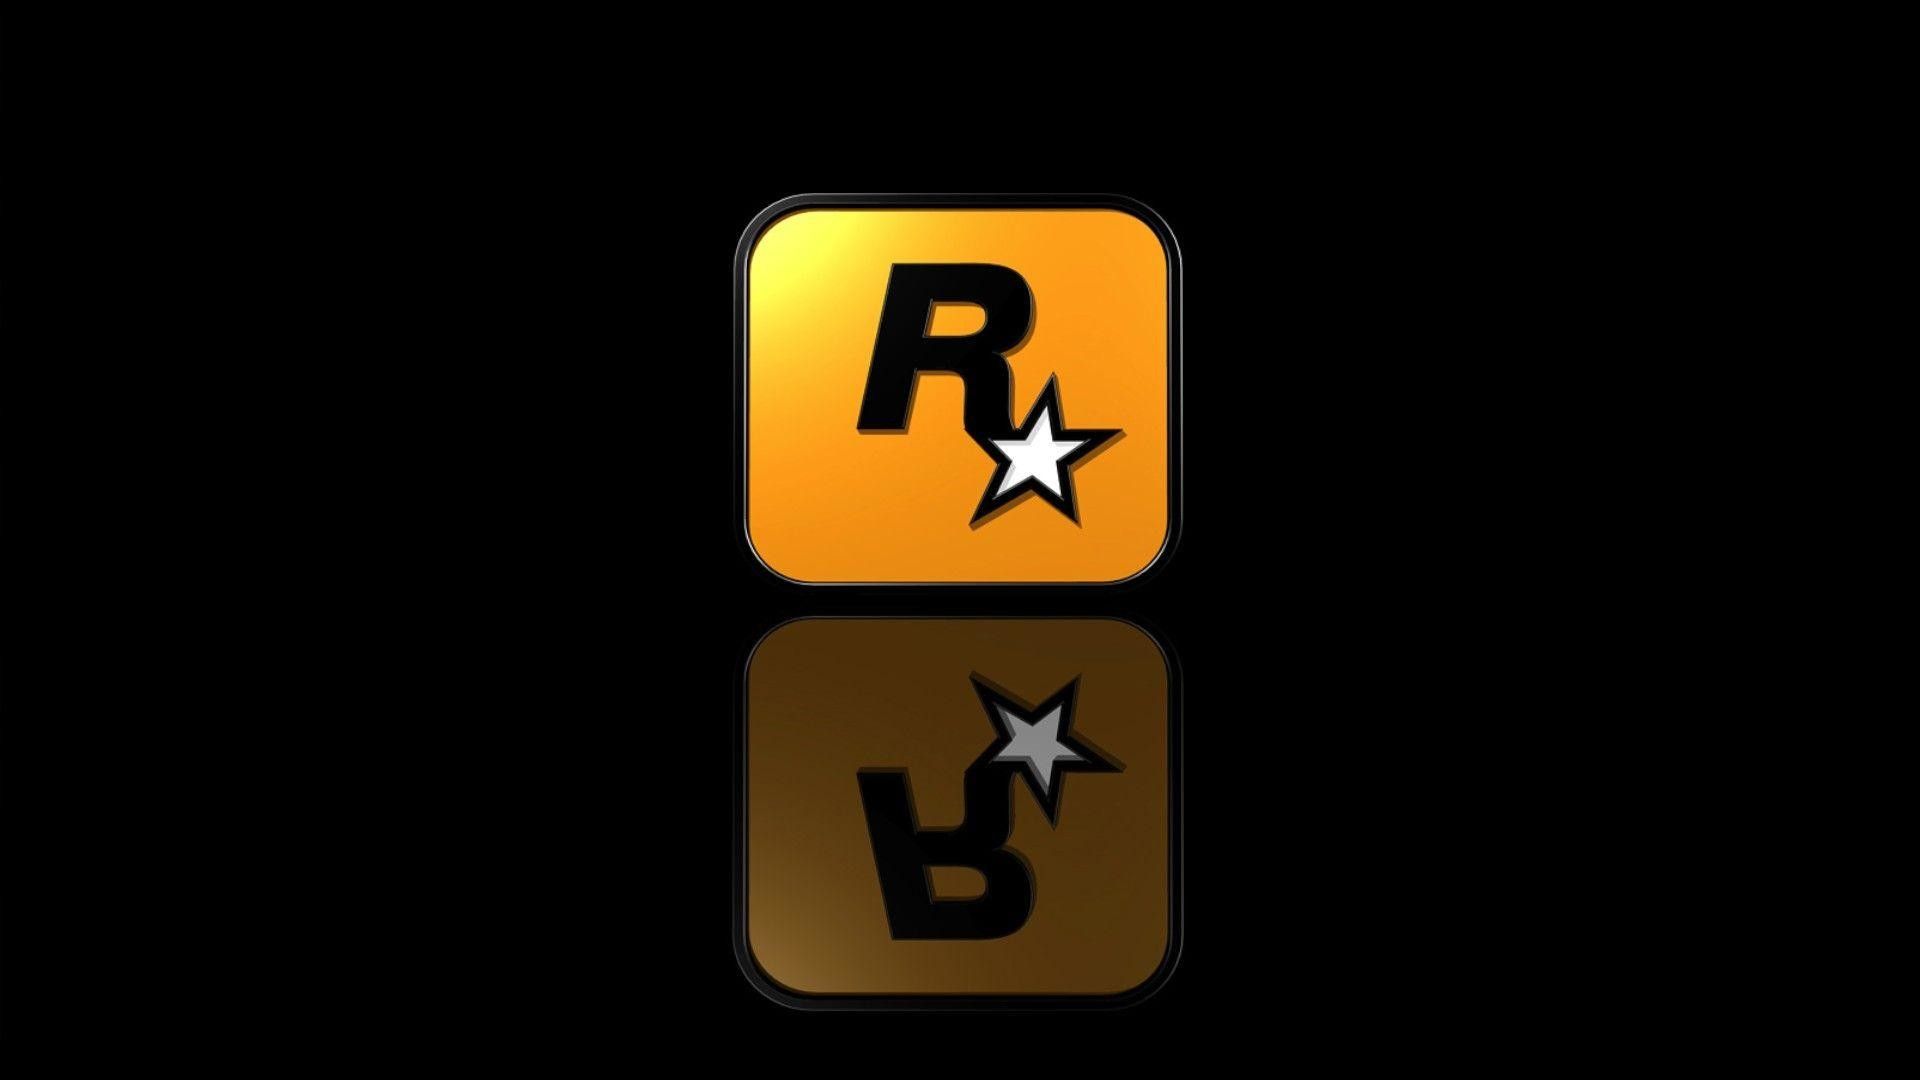 Casting calls hint that Rockstar is casting Bully 2